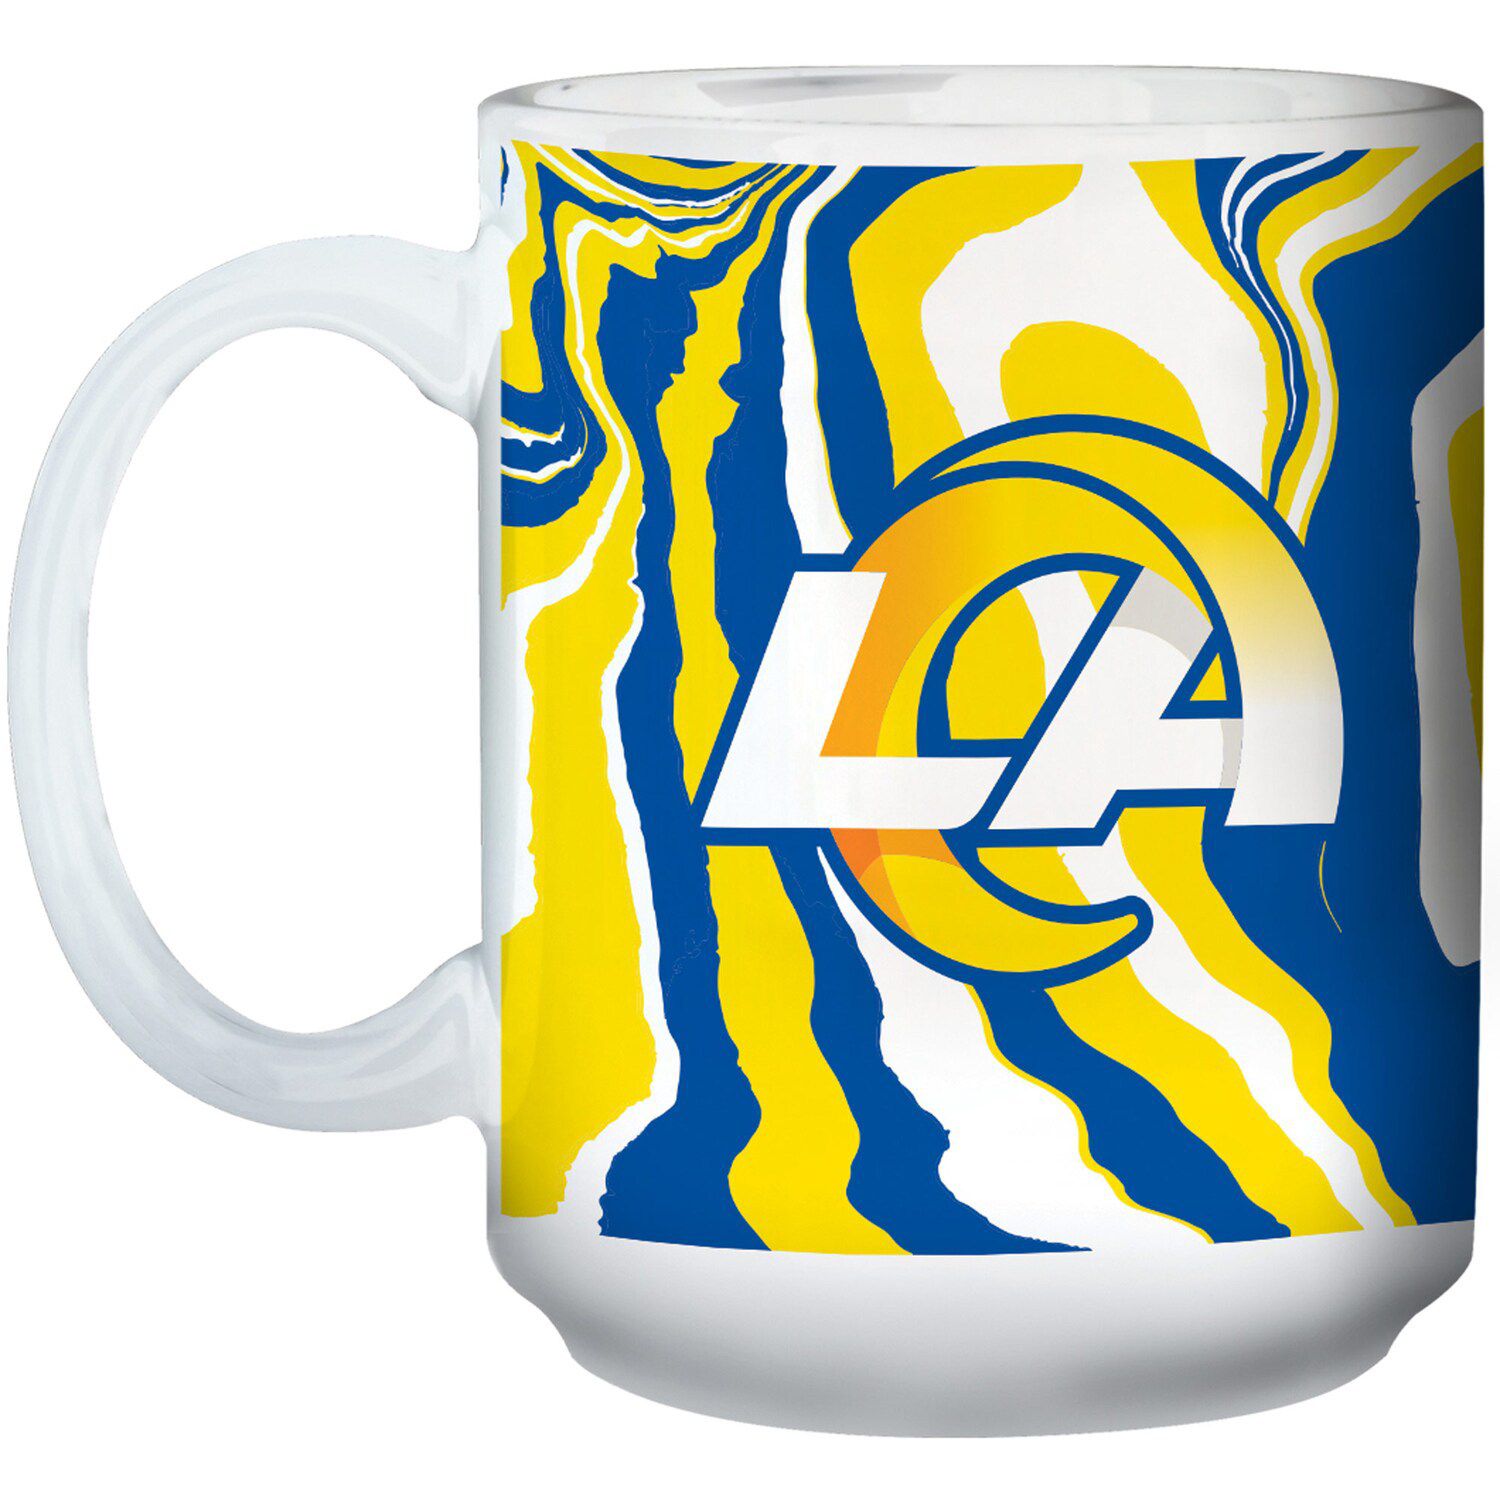 Image for Unbranded Los Angeles Rams 15oz. Tie-Dye Mug at Kohl's.